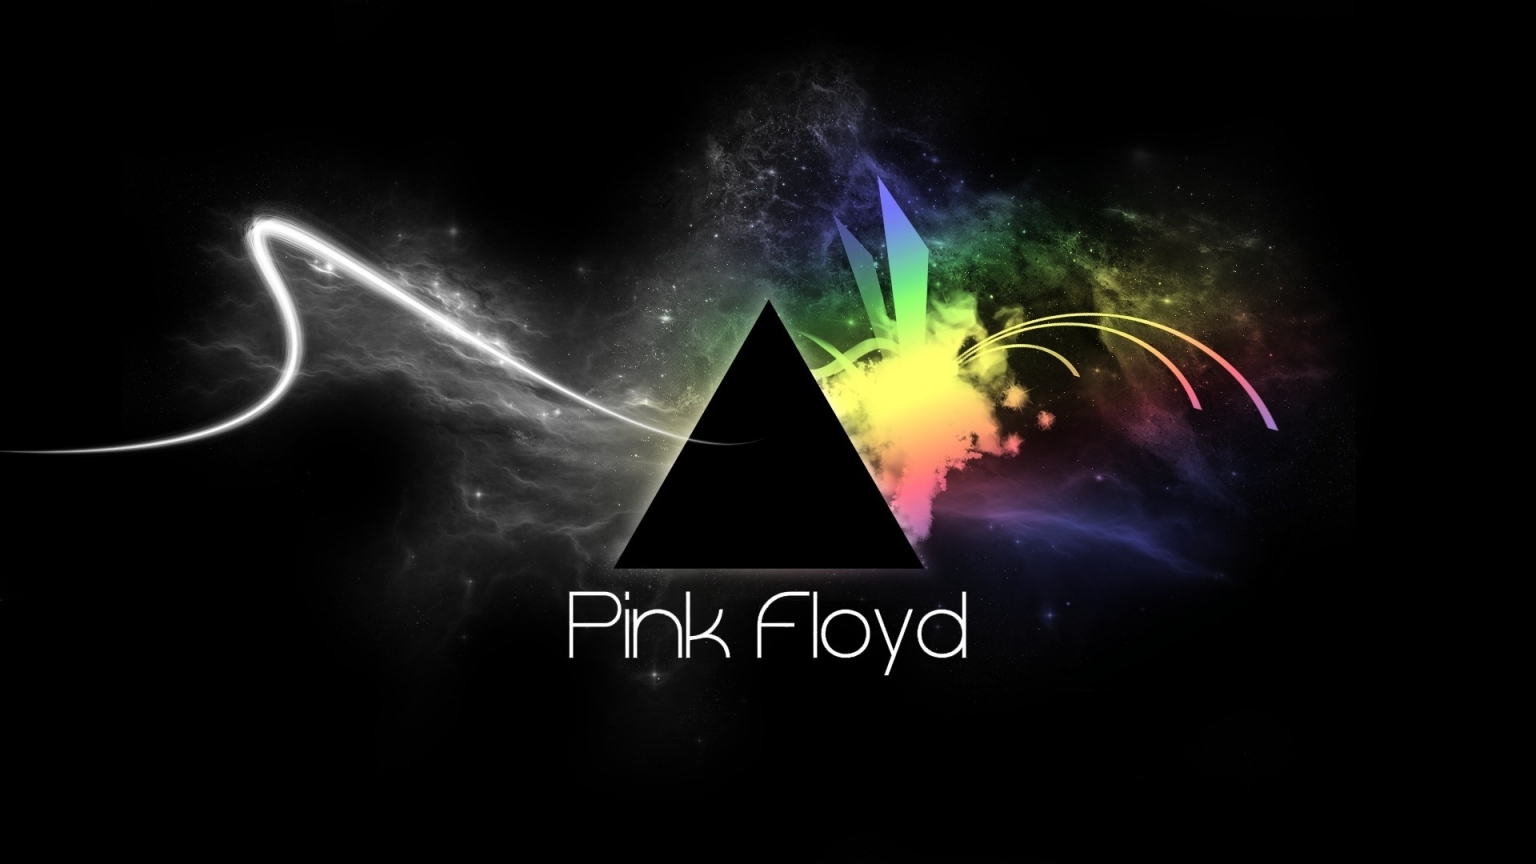 Pink Floyd Logo Design for 1536 x 864 HDTV resolution